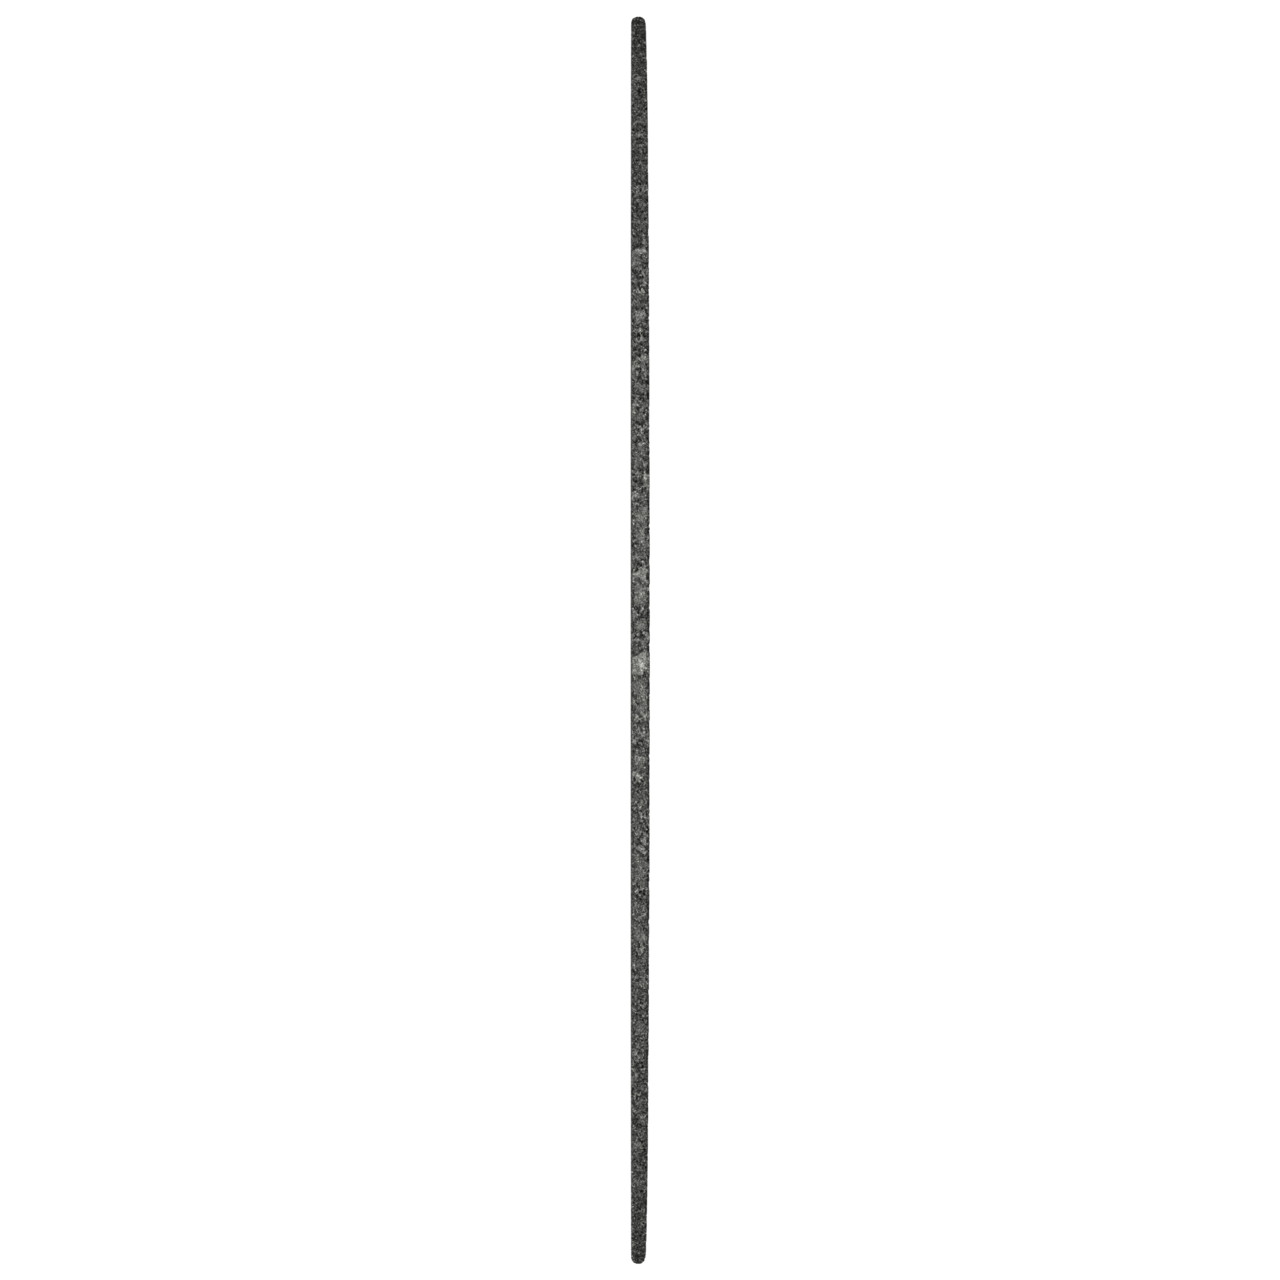 Dischi da taglio TYROLIT DxDxH 63x1,6x10 Per acciaio inox, forma: 41 - versione diritta, Art. 324404